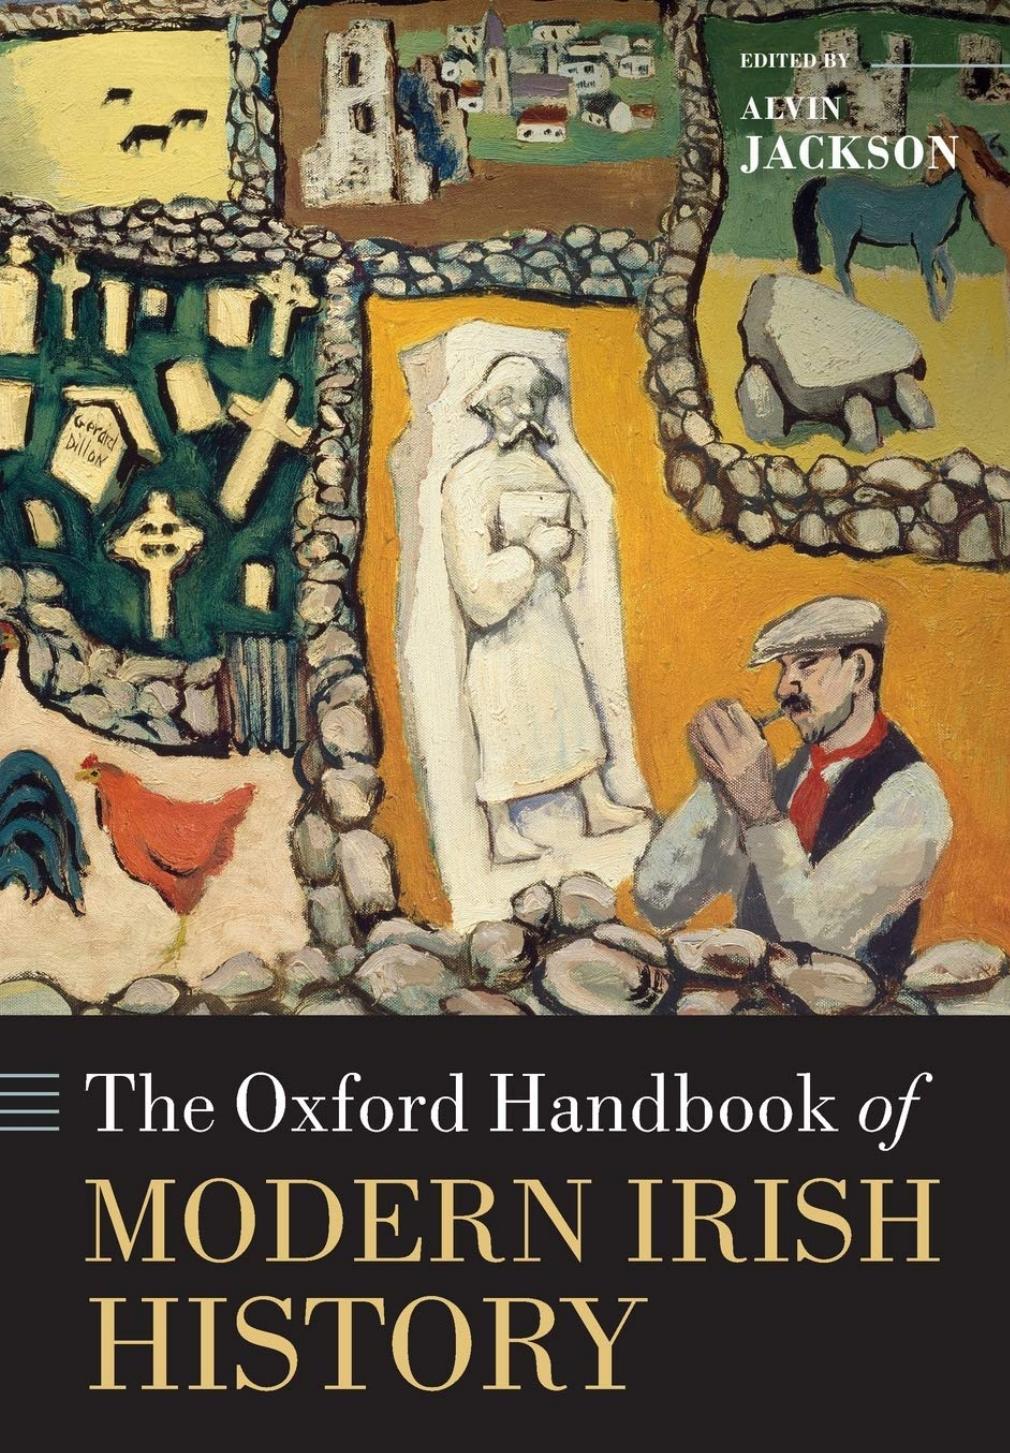 The Oxford Handbook of Modern Irish History by Alvin Jackson (editor)